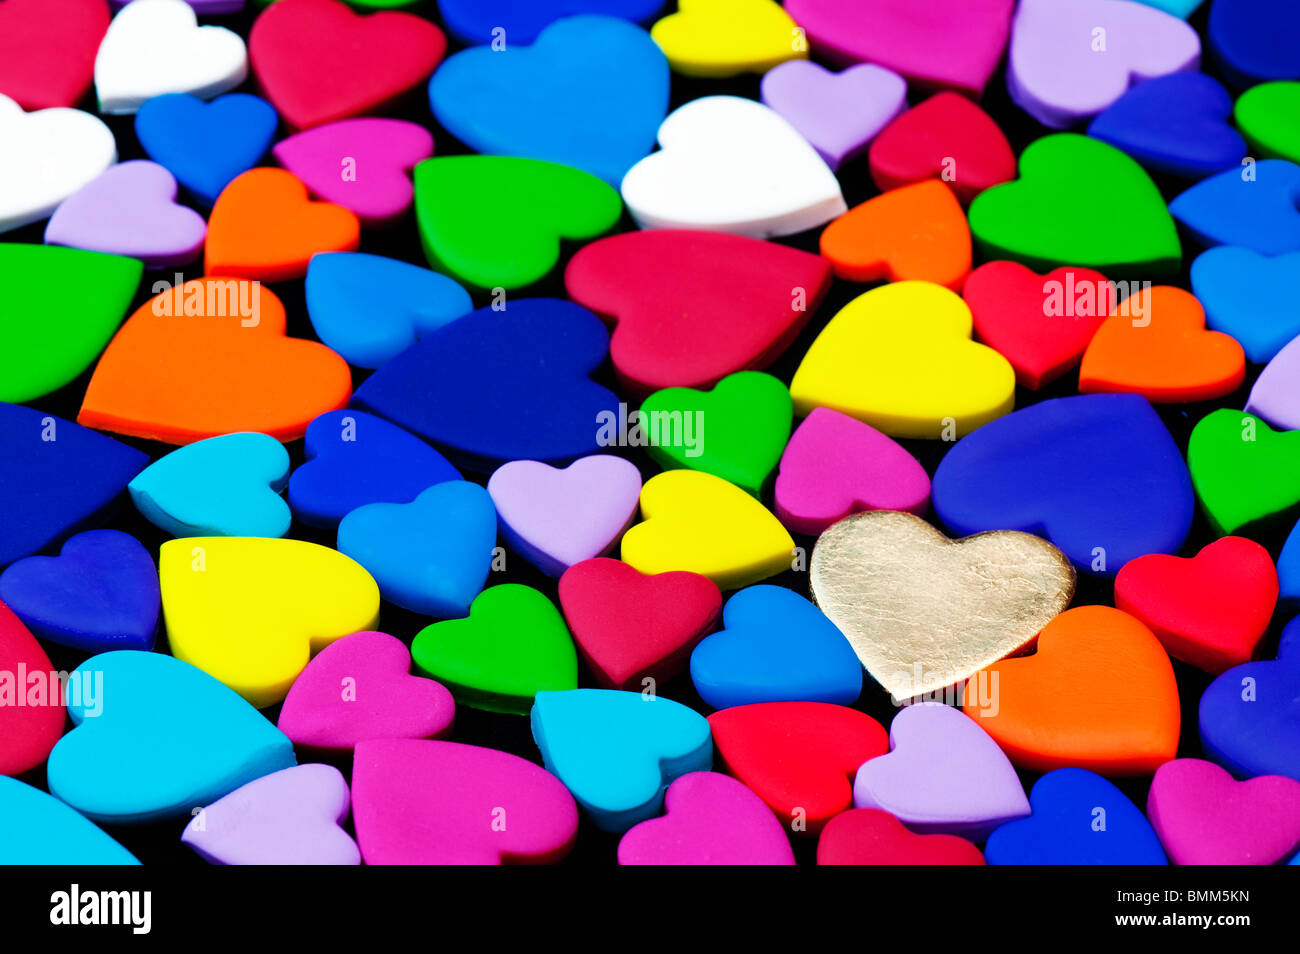 Multicoloured heart shape pattern against black background Stock Photo